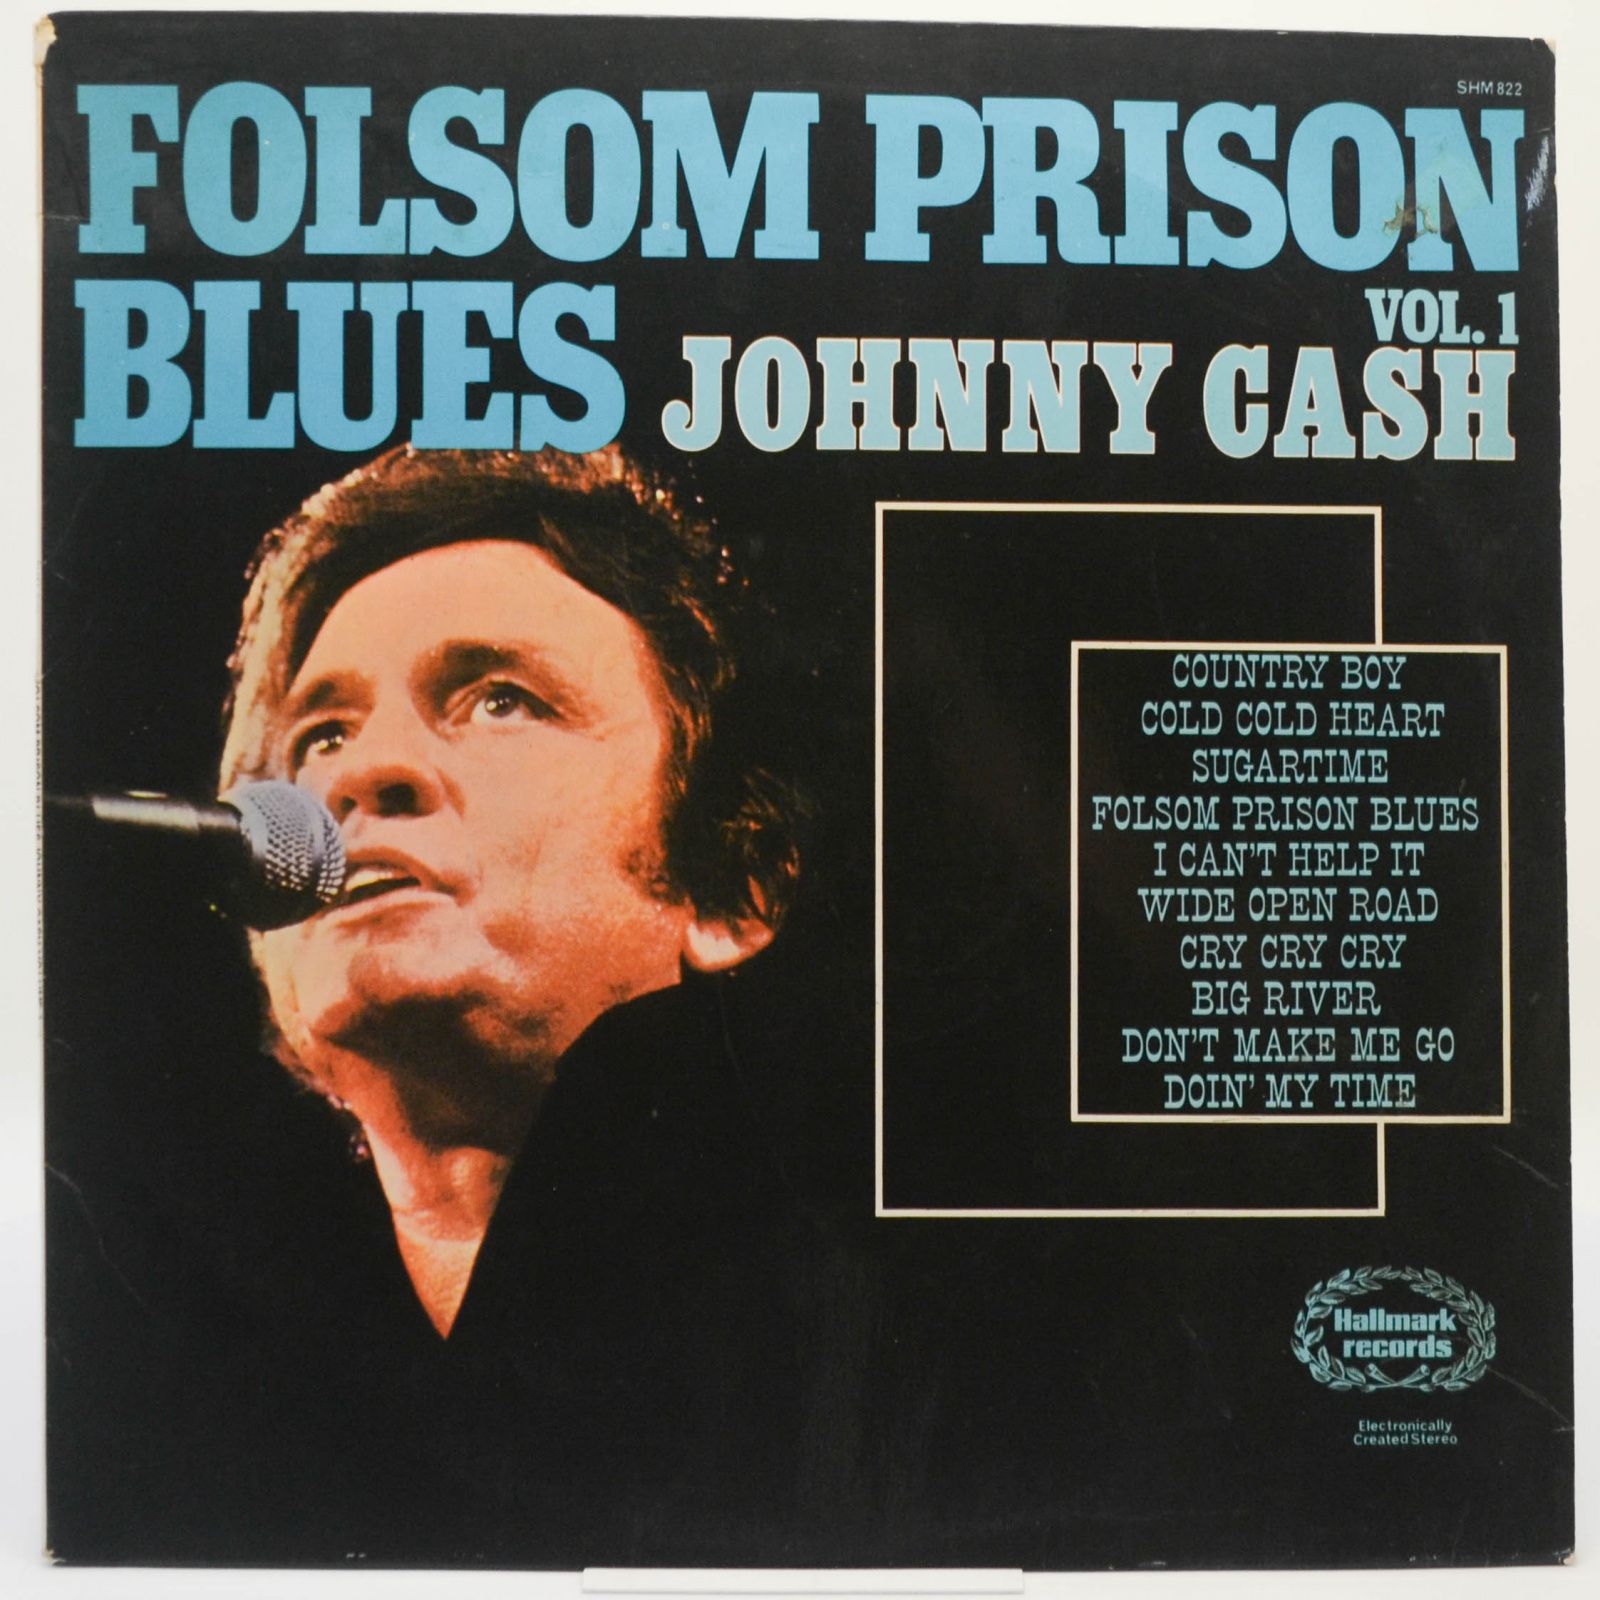 Johnny Cash — Folsom Prison Blues Vol. 1, 1973